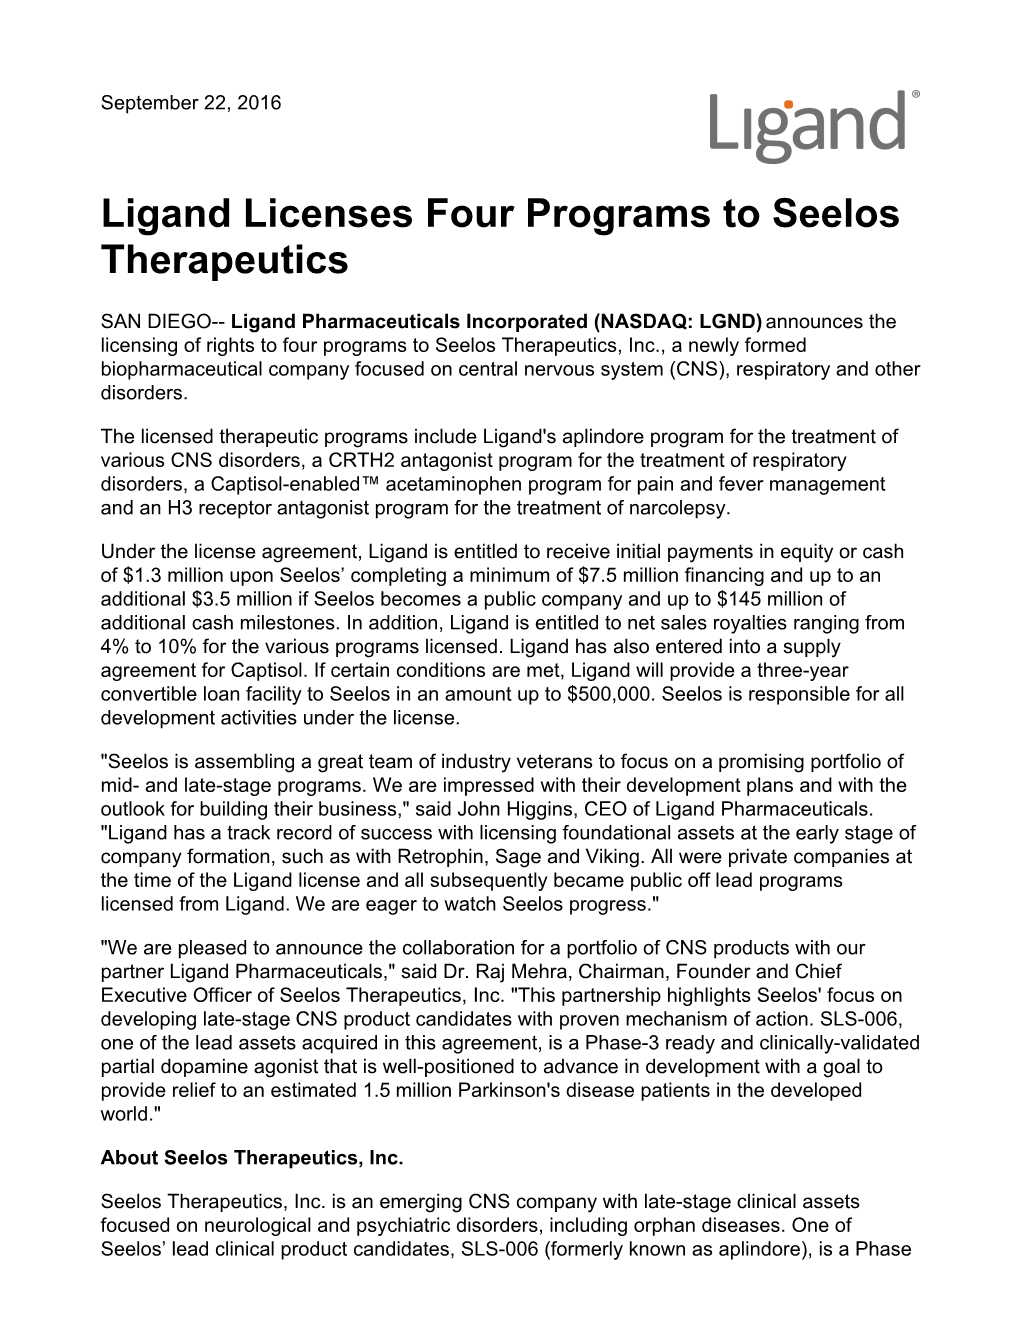 Ligand Licenses Four Programs to Seelos Therapeutics